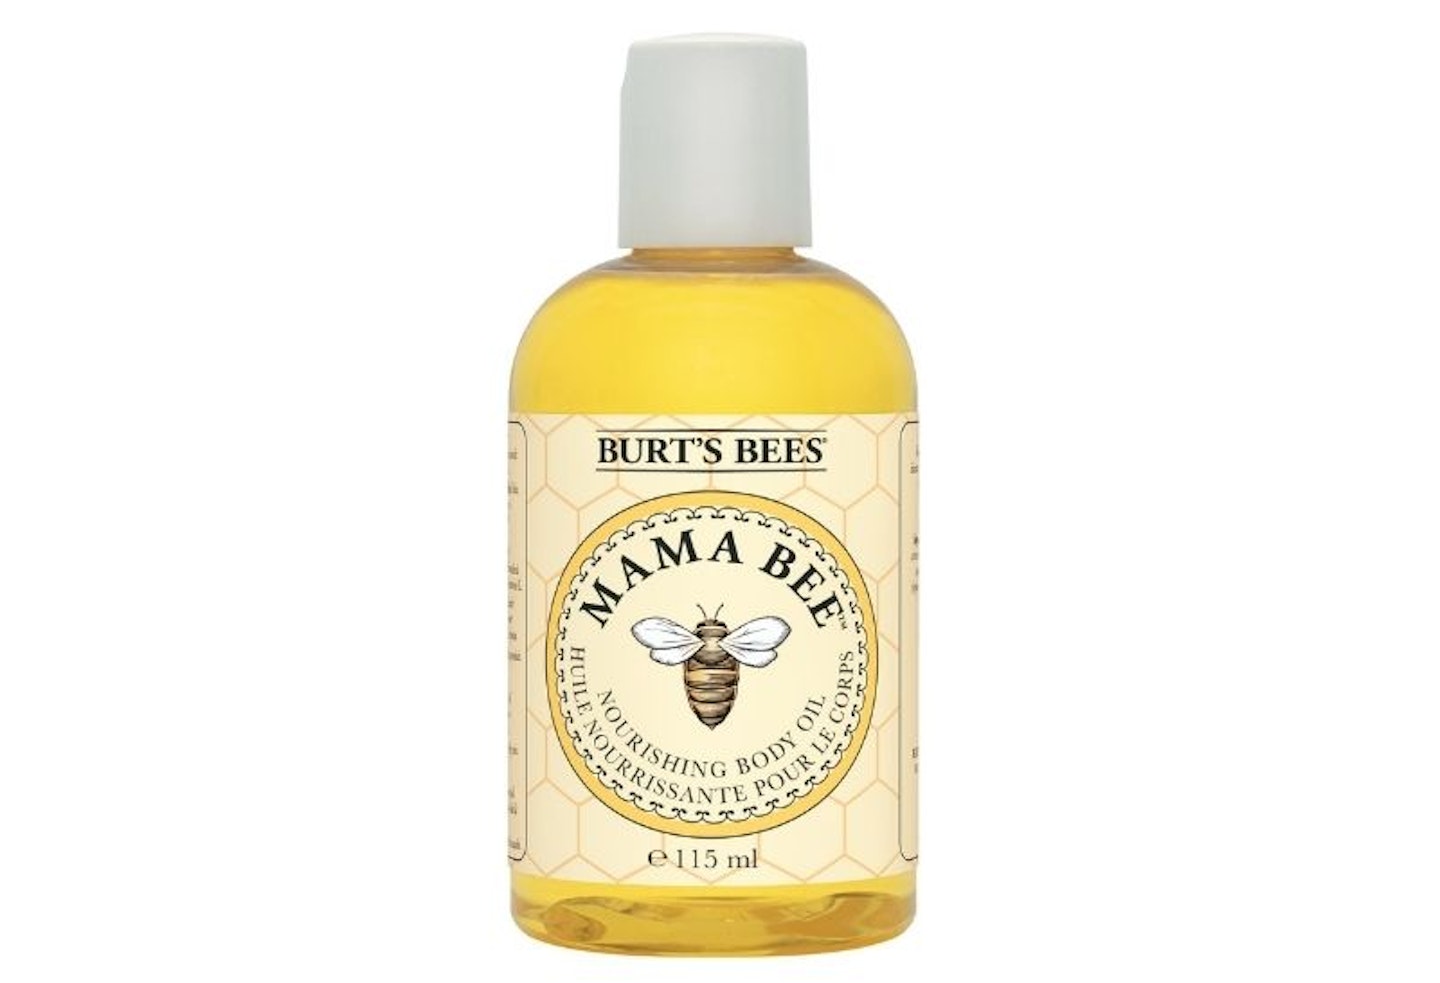 Burt’s Bees Mama Bee Body Oil with Vitamin E